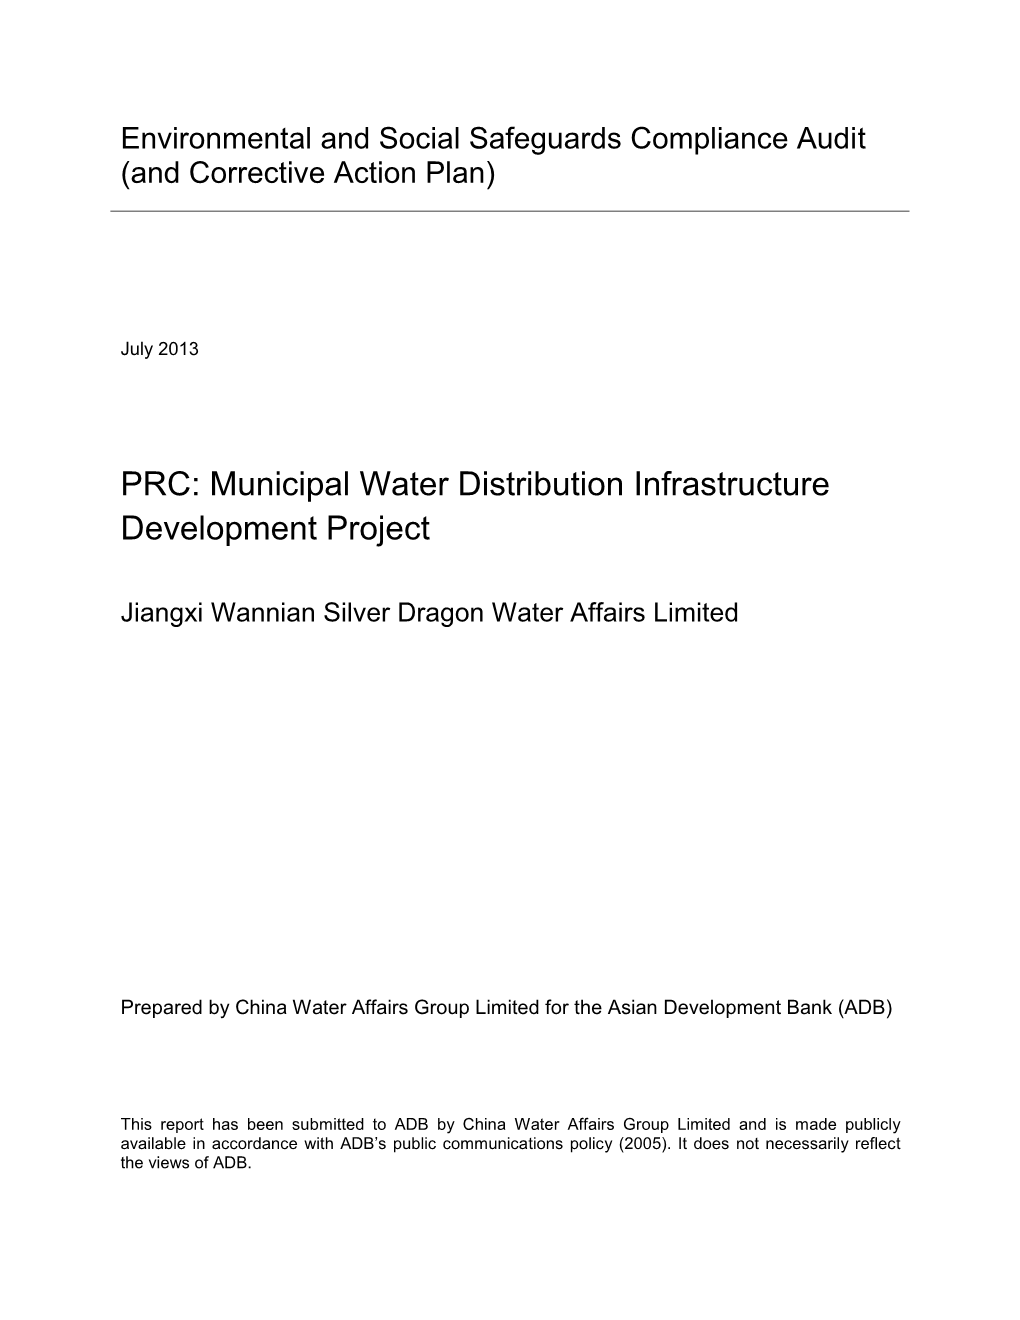 45900-014: Municipal Water Distribution Infrastructure